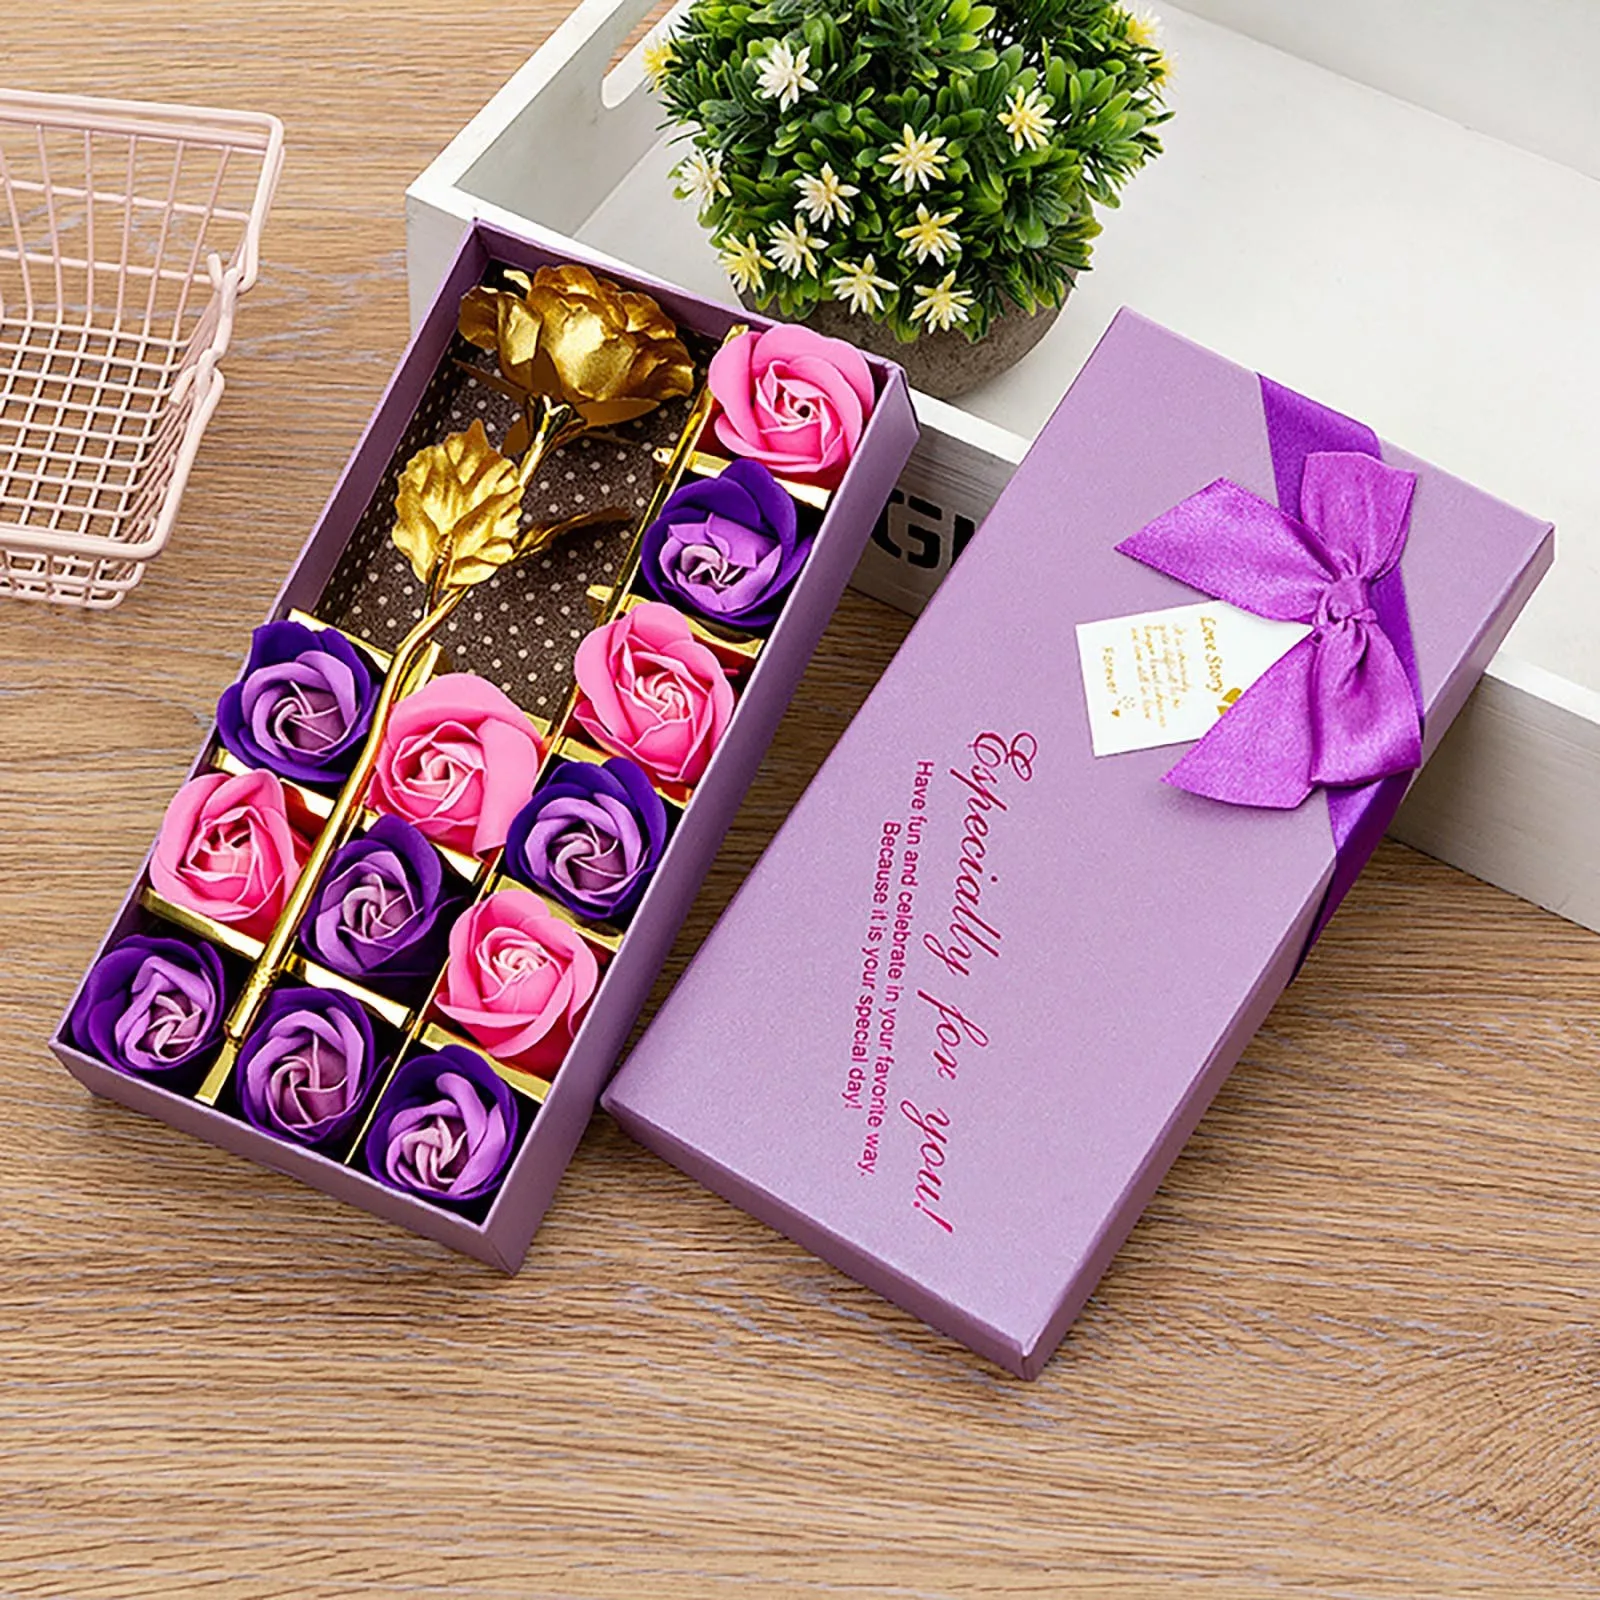 Soap Flowers And Golden Rose In Elegant Gift Box